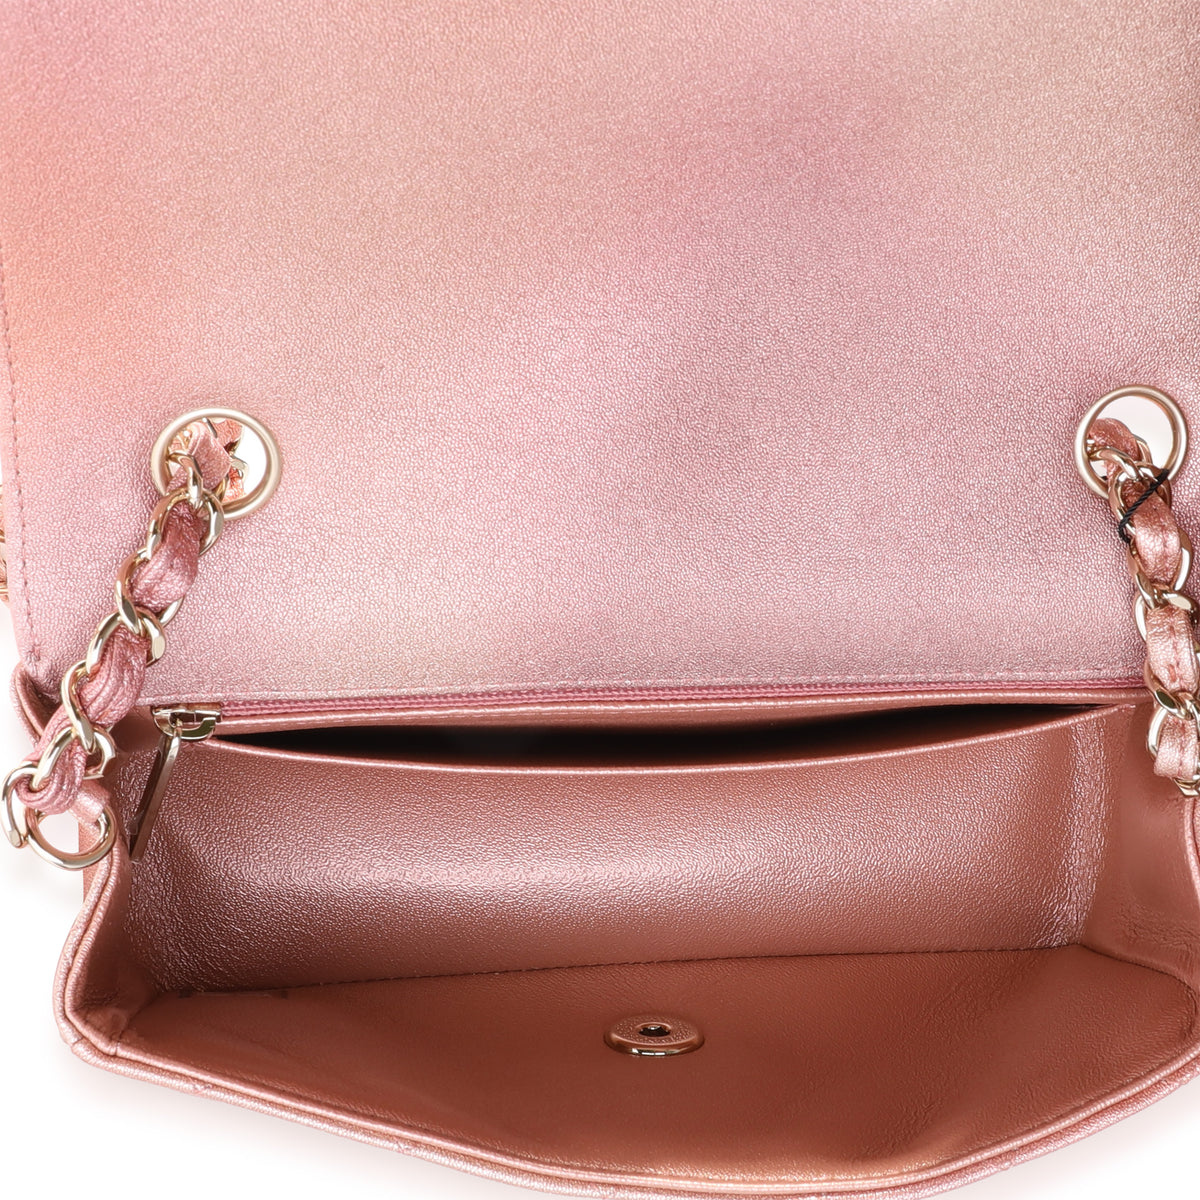 Chanel Metallic Rose Gold Ombré Classic Rectangular Mini Flap Bag